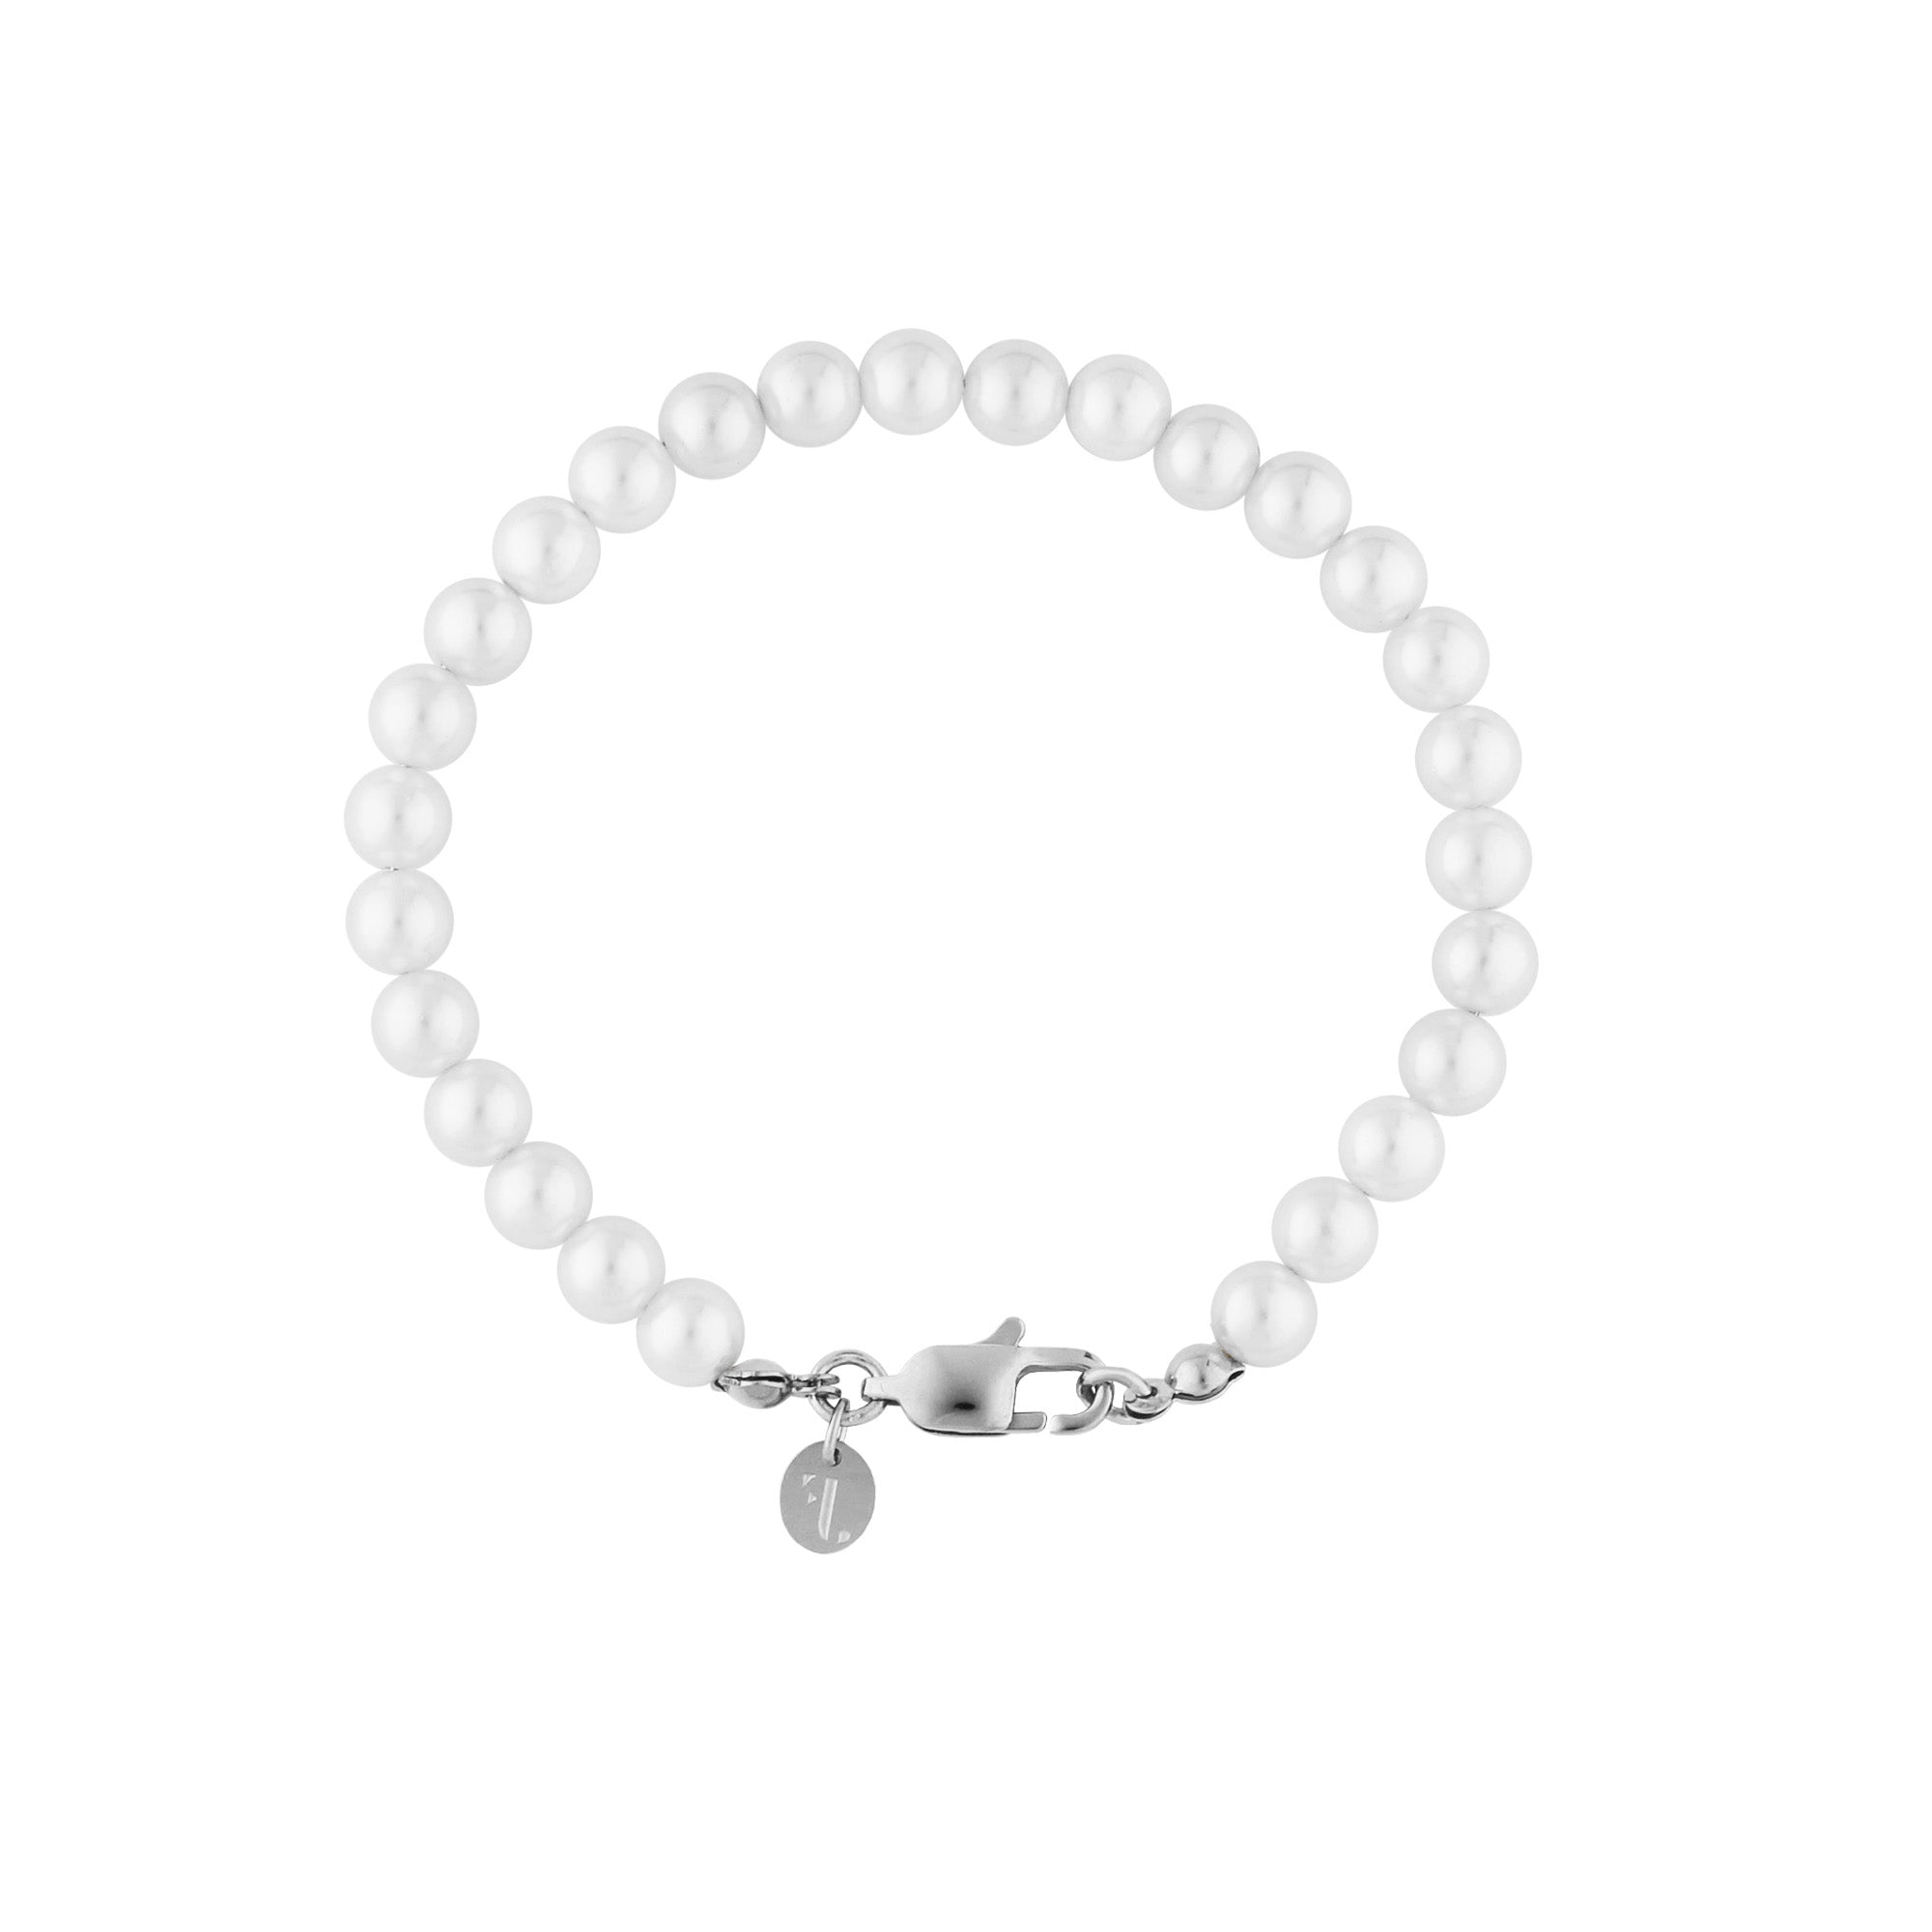 FJ Watches Var bracelet men women white pearls beads silver 6mm